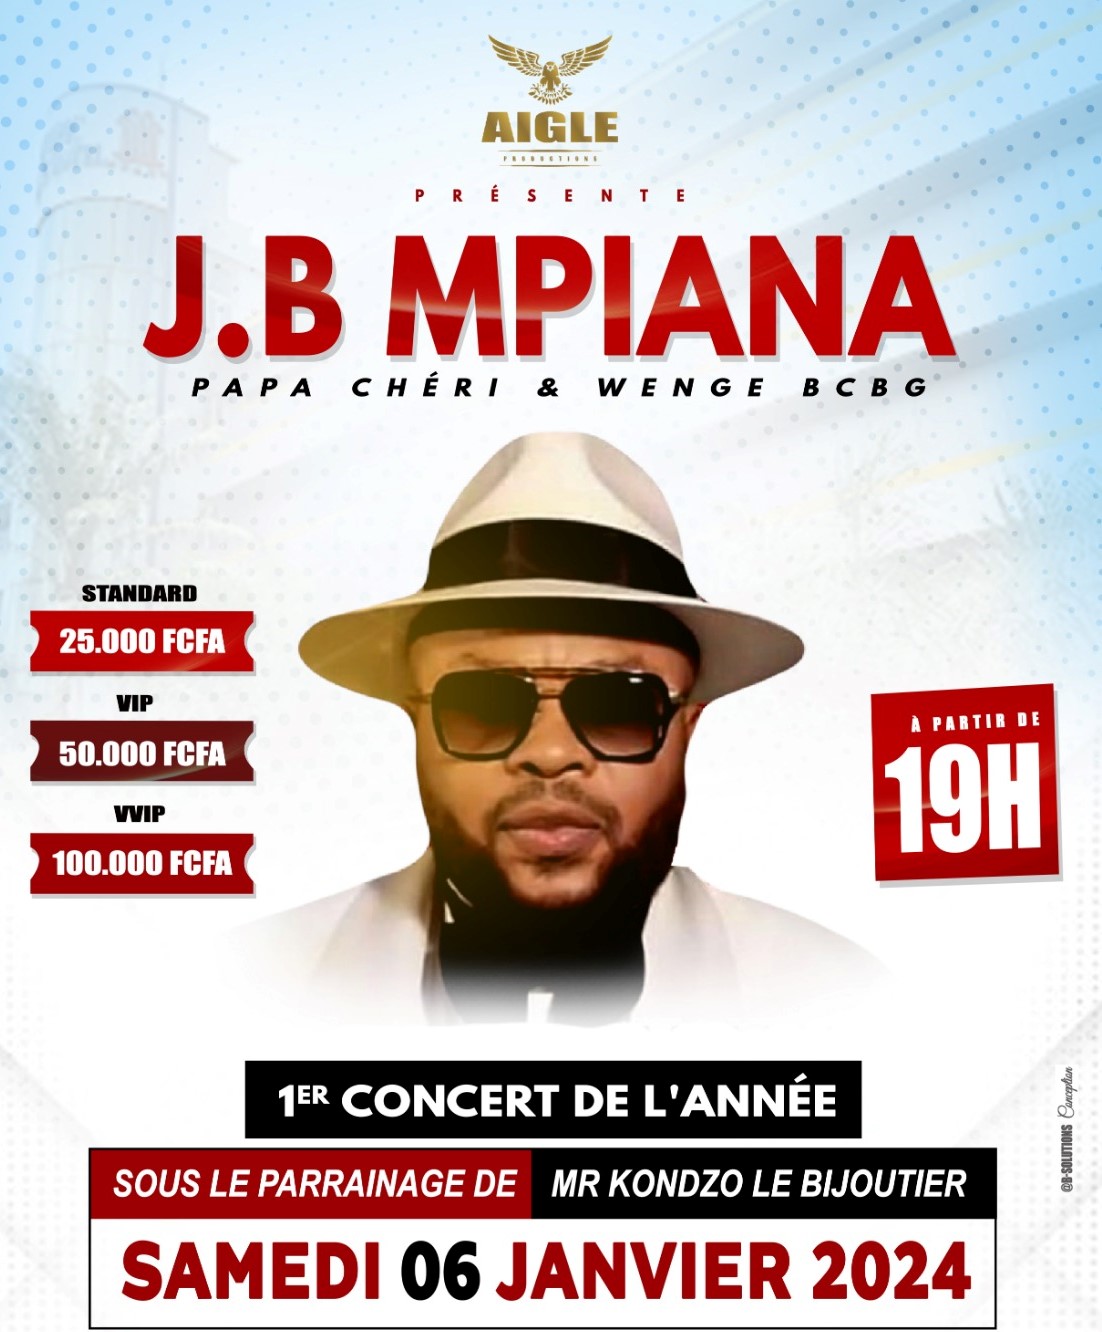 Congo : JB Mpiana en concert à l’hôtel Olympic palace de Brazzaville